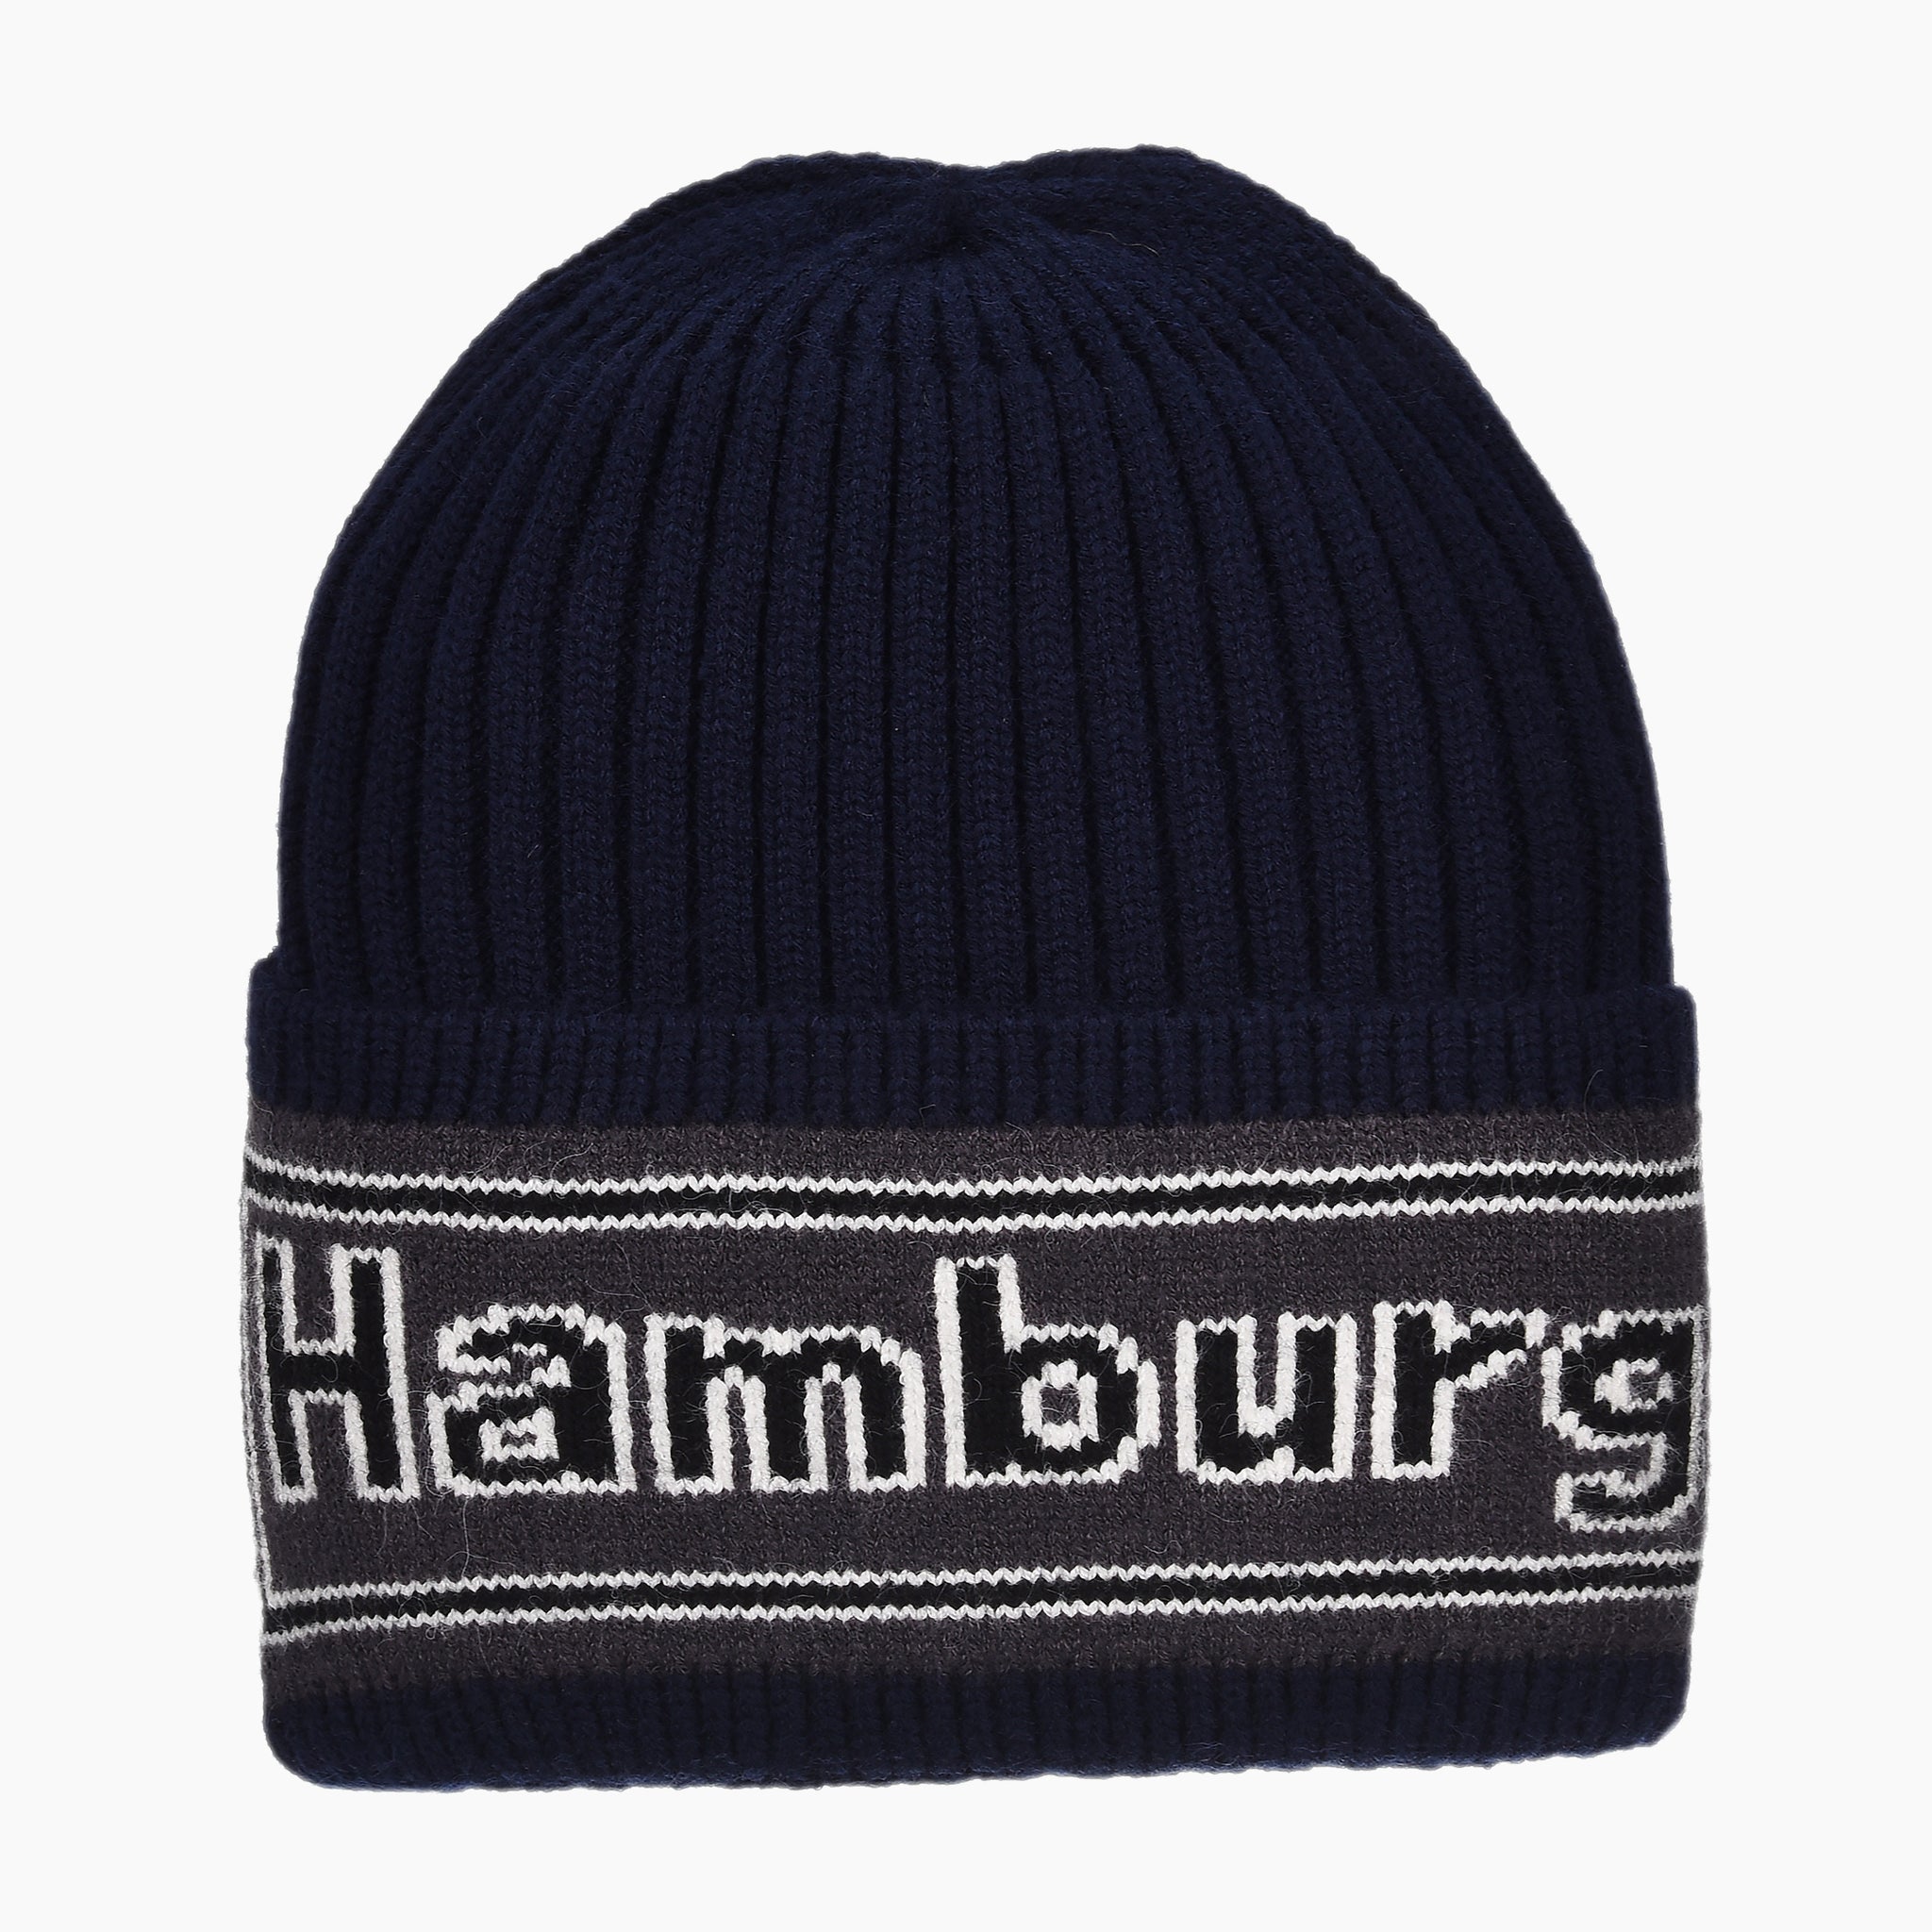 Hamburg Beanie Winter Hat - Robin Ruth